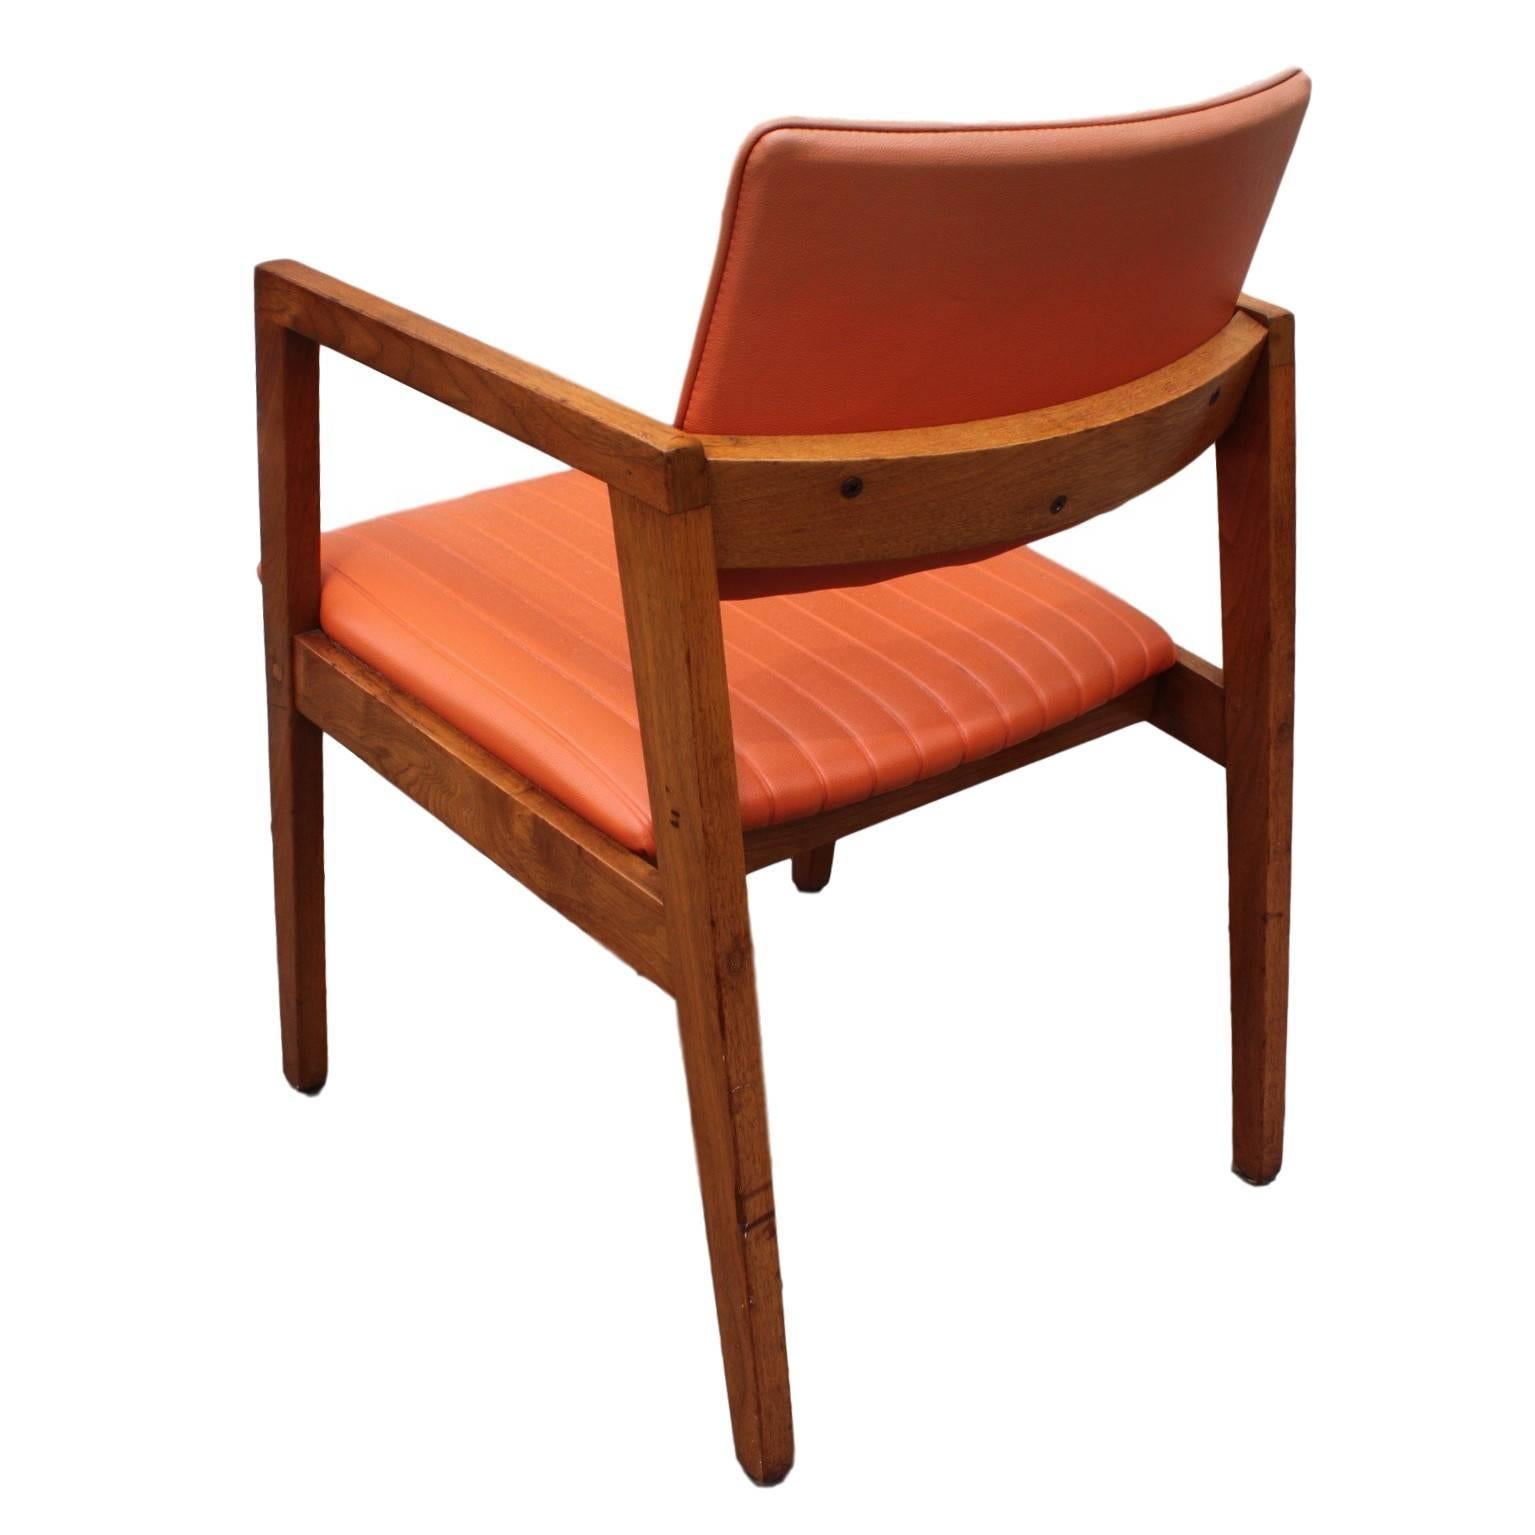 mid century orange chair